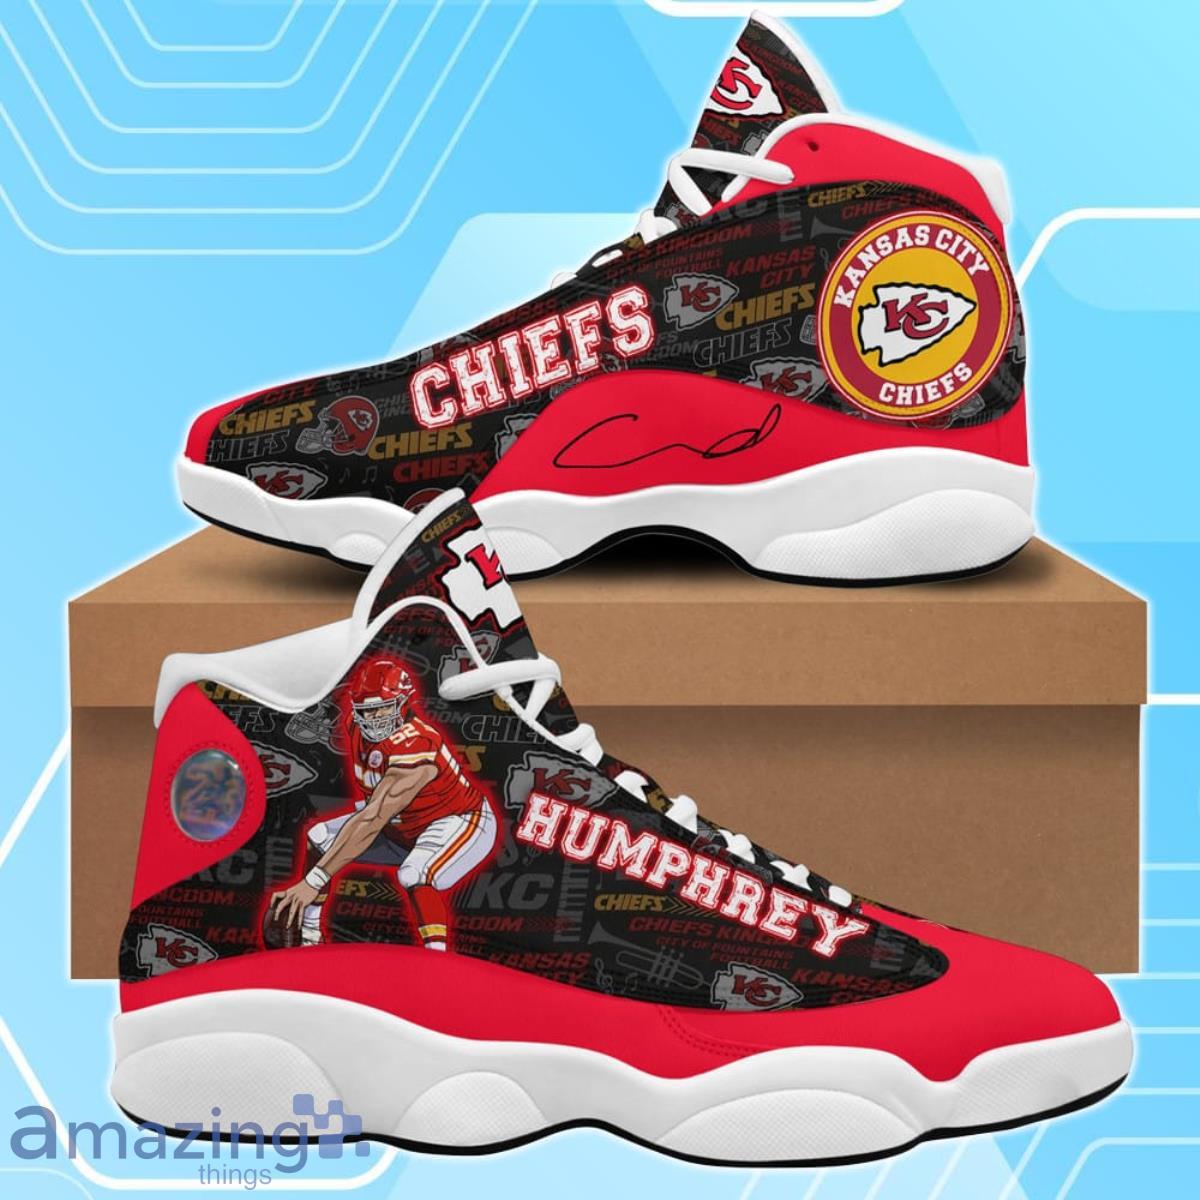 Kansas City Chiefs Creed Humphrey Air Jordan 13 Shoes For Men Women Product Photo 1